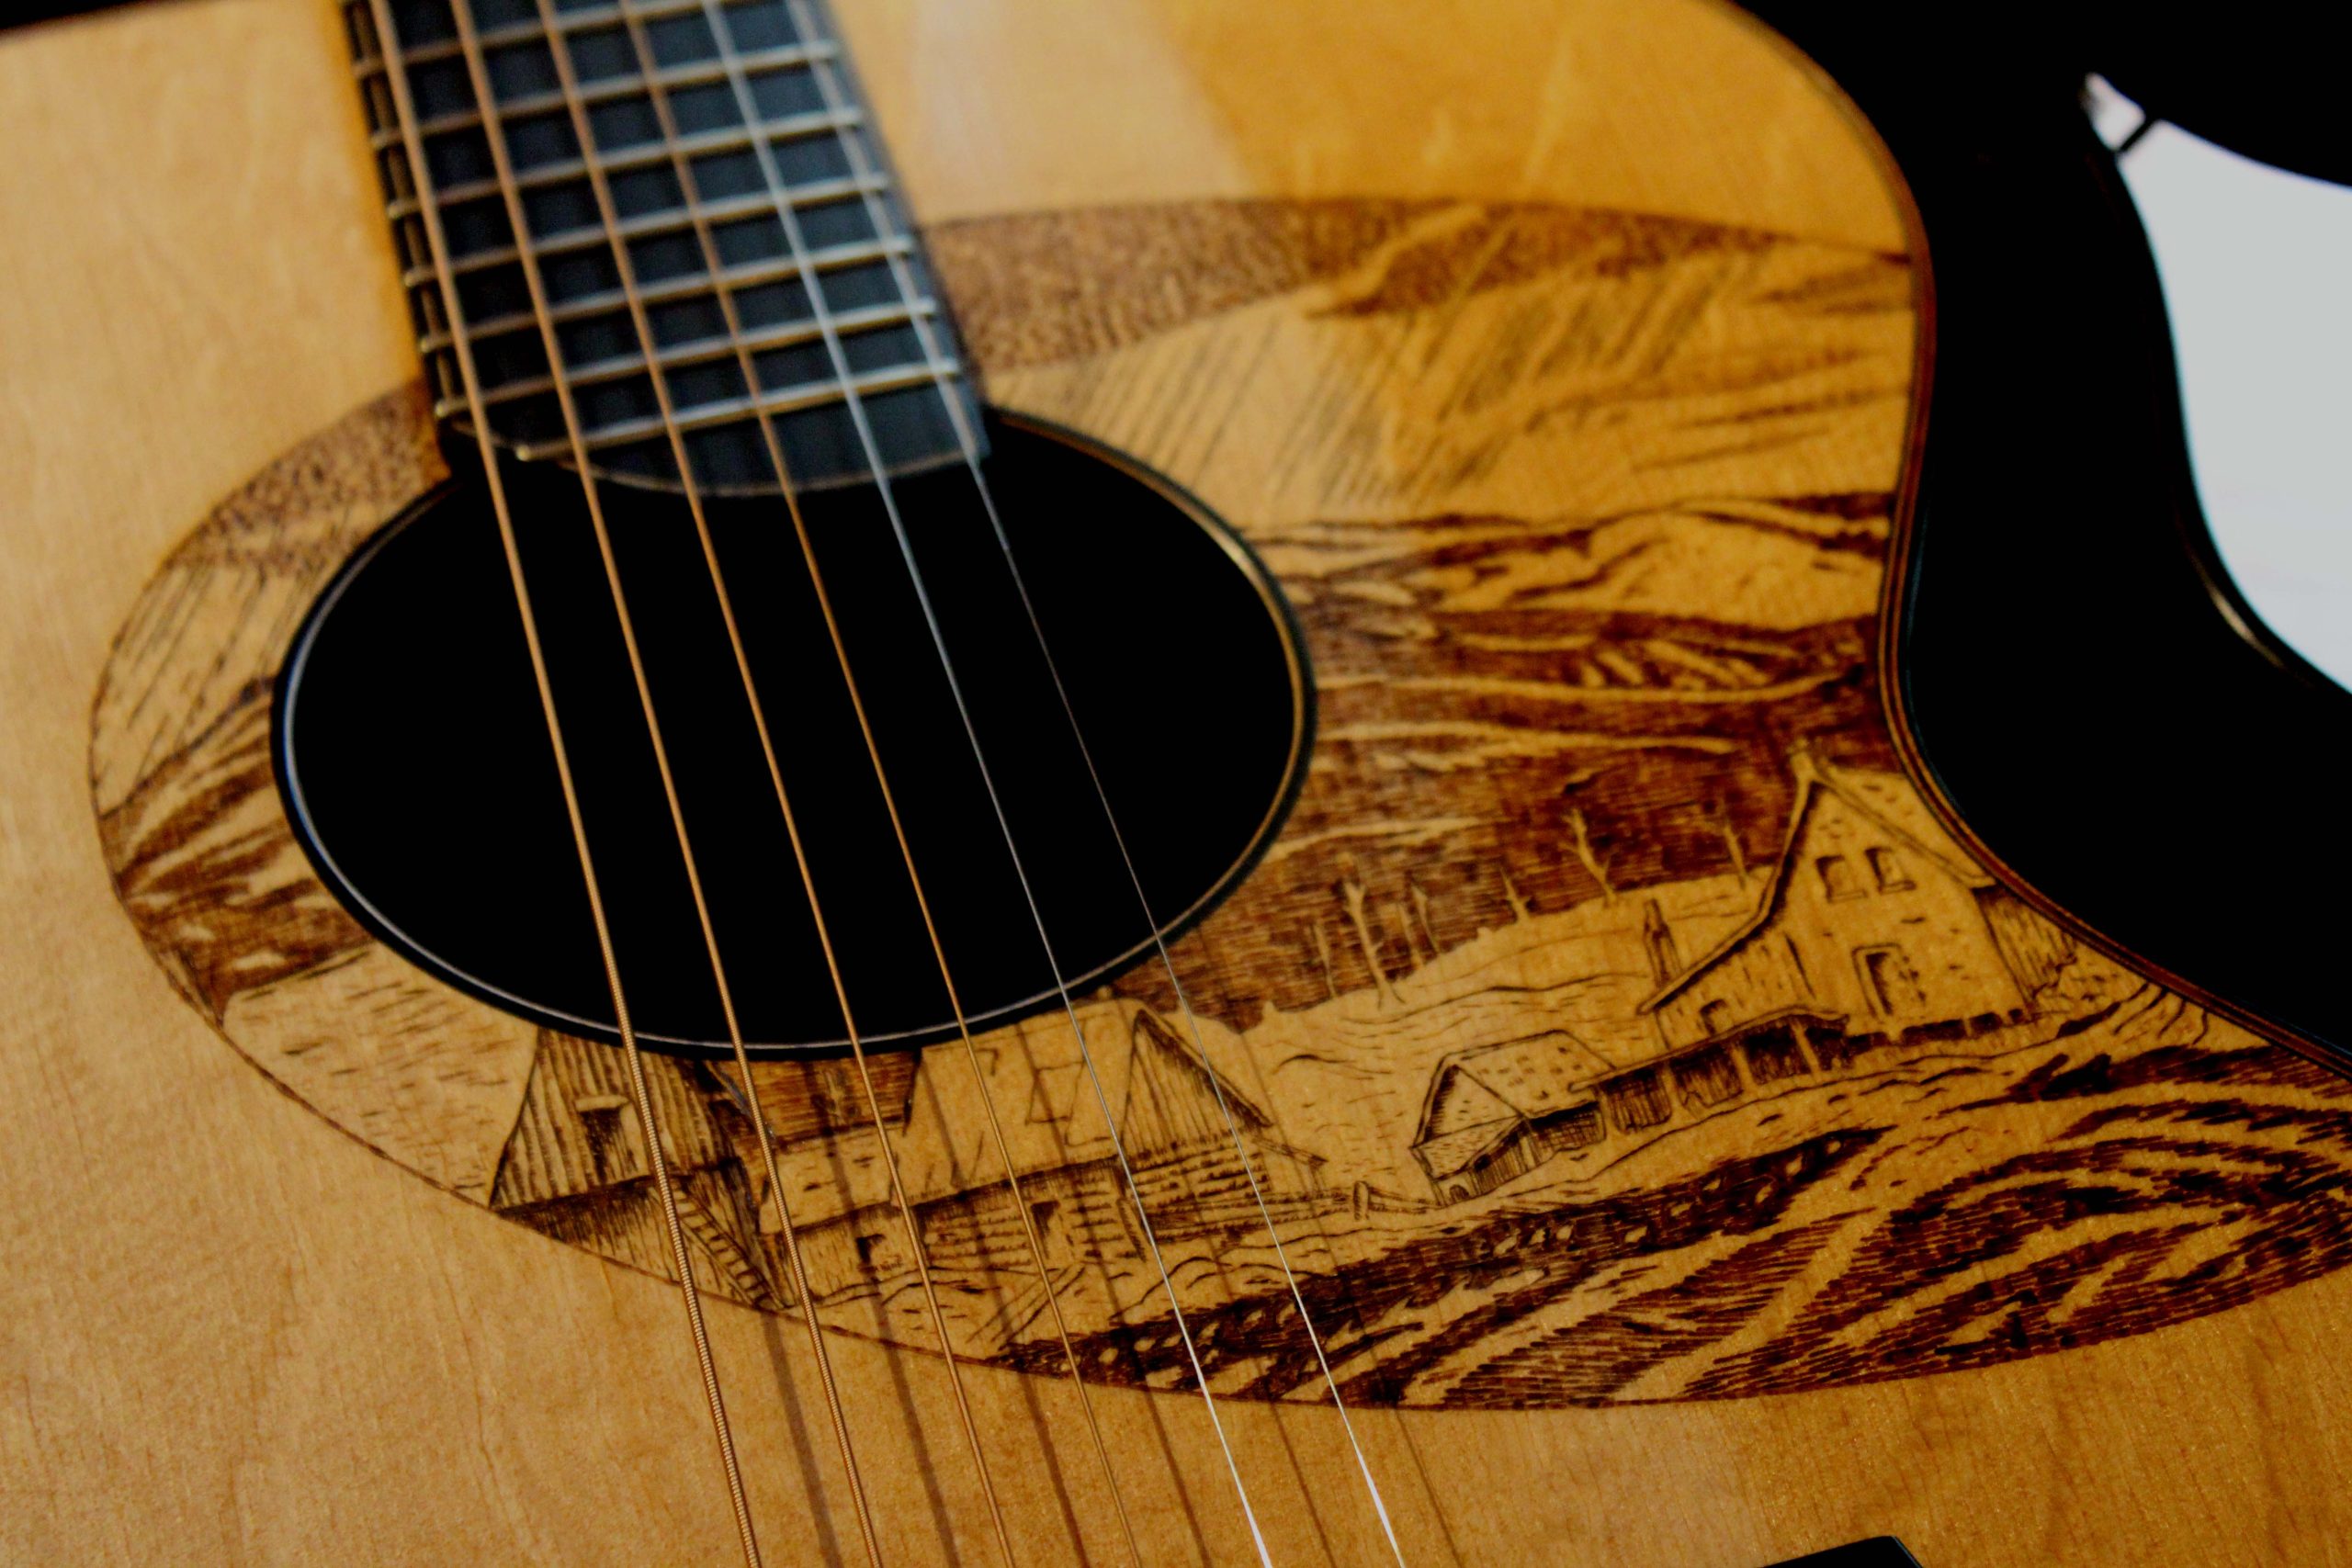 David Wren’s guitar, inspired by Franklin Carmichael